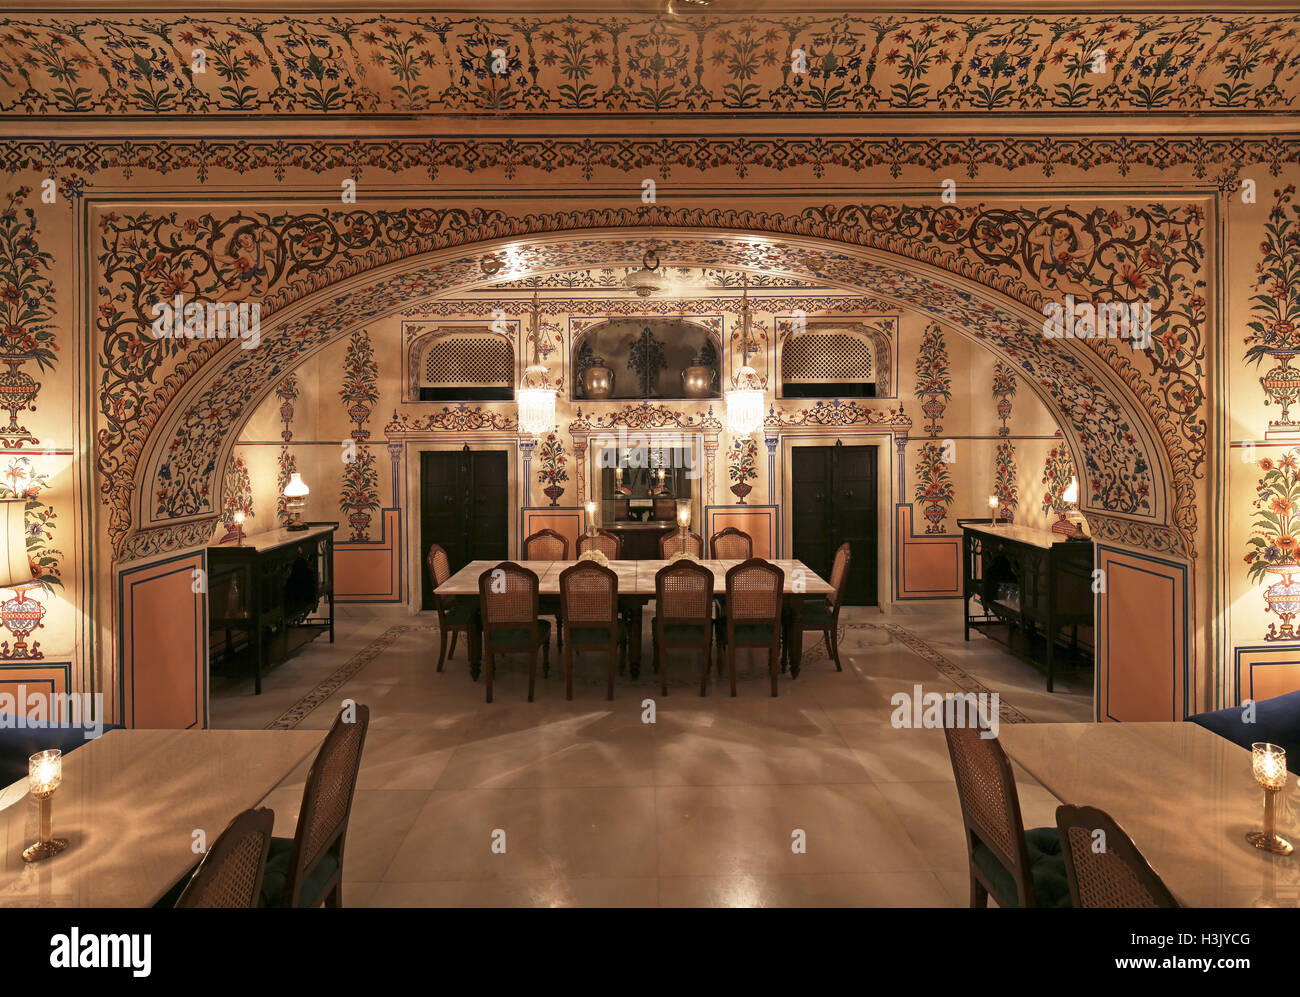 View inside traditional Rajasthan dining room. Baradari at City Palace, Jaipur, India. Architect: Studio Lotus , 2016. Stock Photo